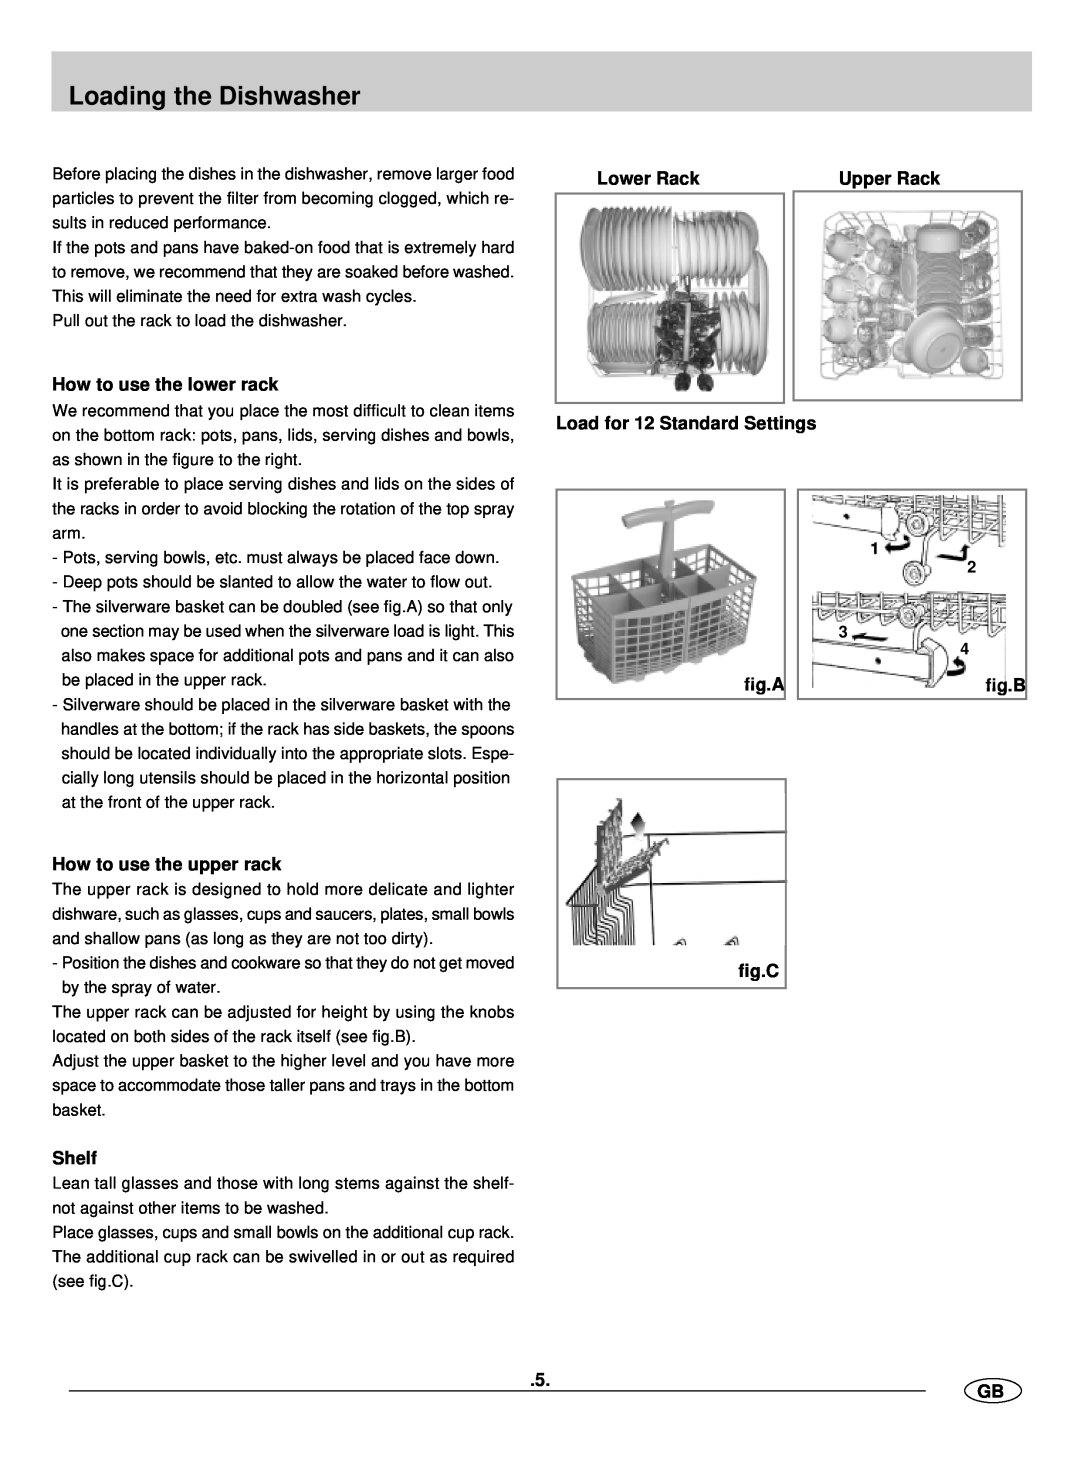 Hyundai IT DW12-BFM Loading the Dishwasher, How to use the lower rack, How to use the upper rack, Shelf, Lower Rack, fig.A 